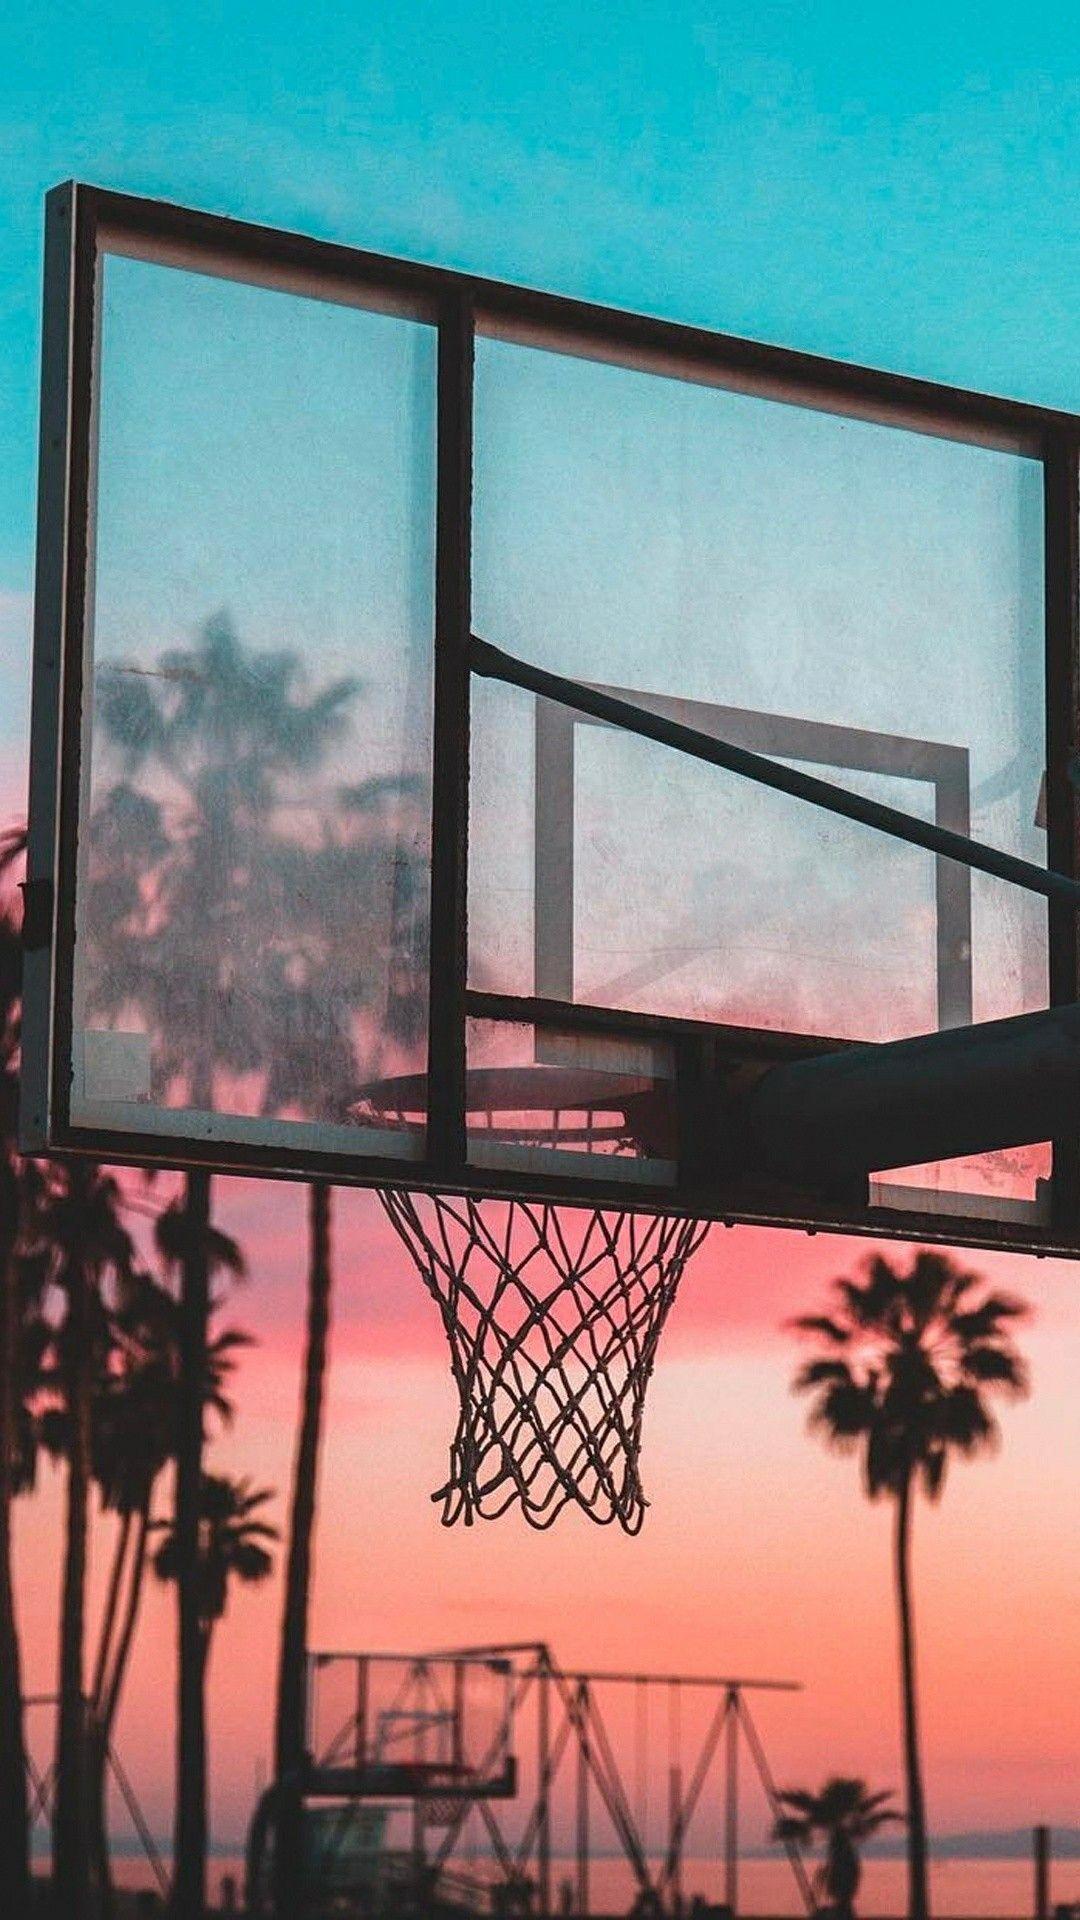 nike basketball wallpaper for iphone